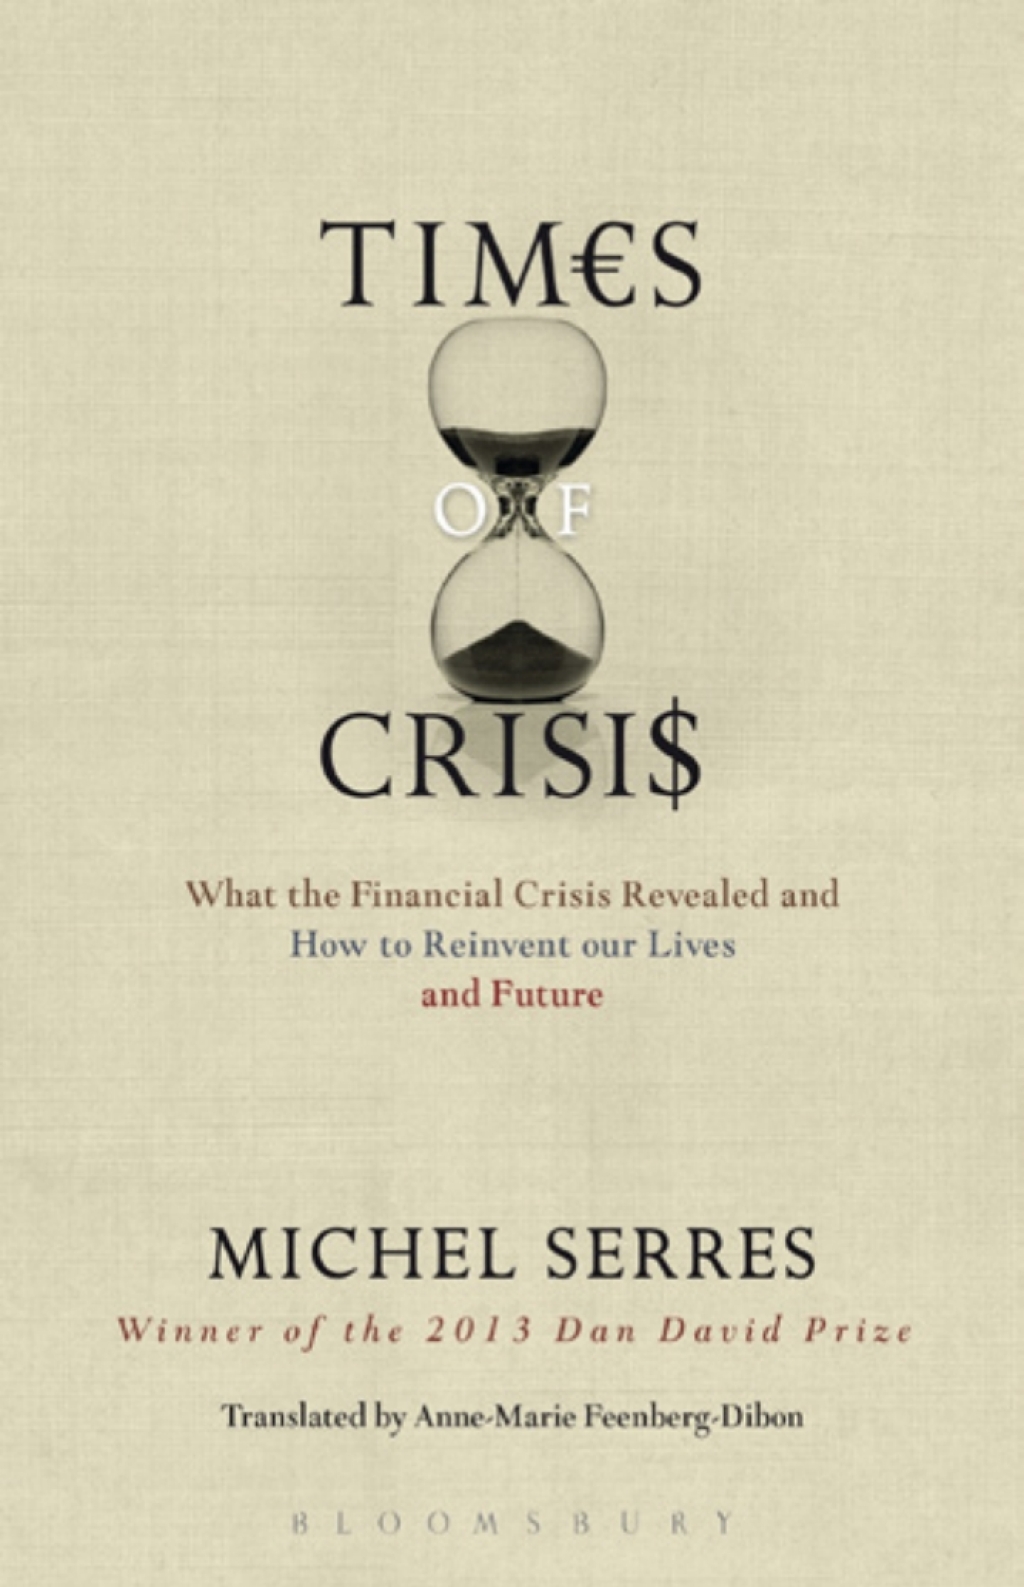 Times of Crisis (eBook) - Michel Serres